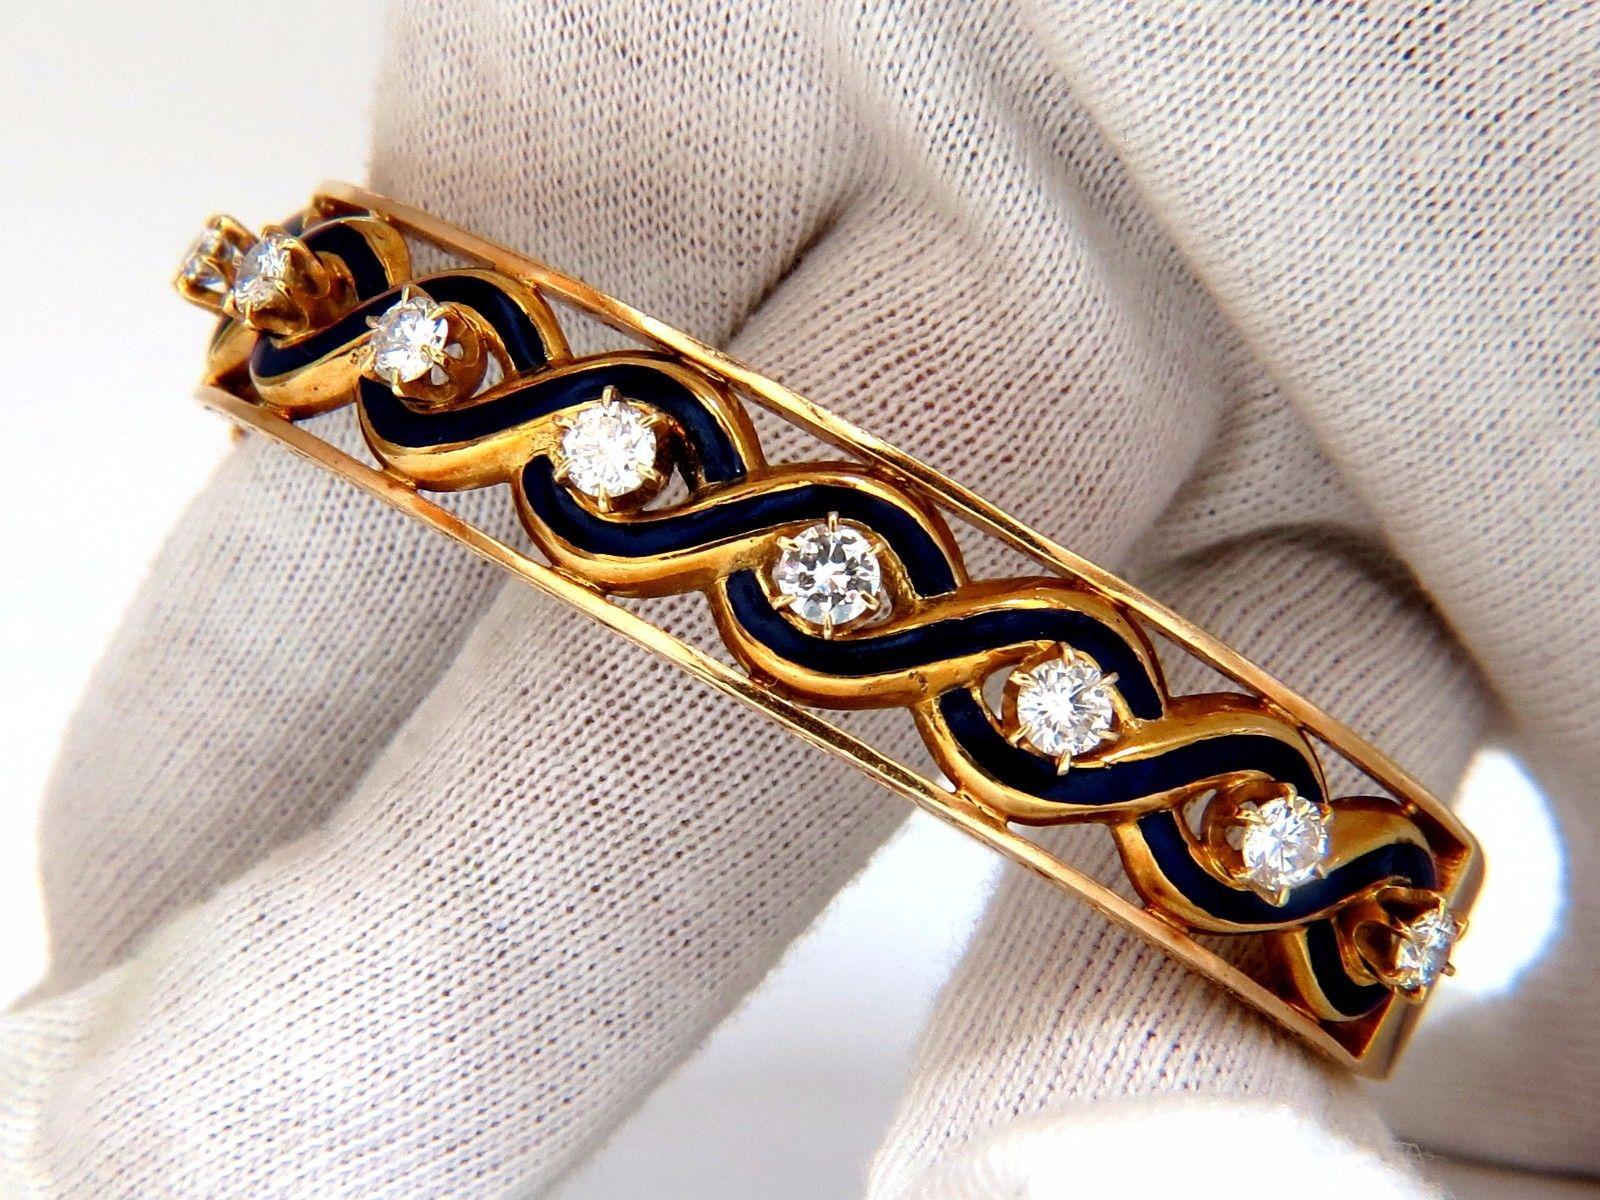 Victorian Ridged Interwoven Braided Handmade Diamond Bangle Bracelet 14 Karat In Good Condition For Sale In New York, NY